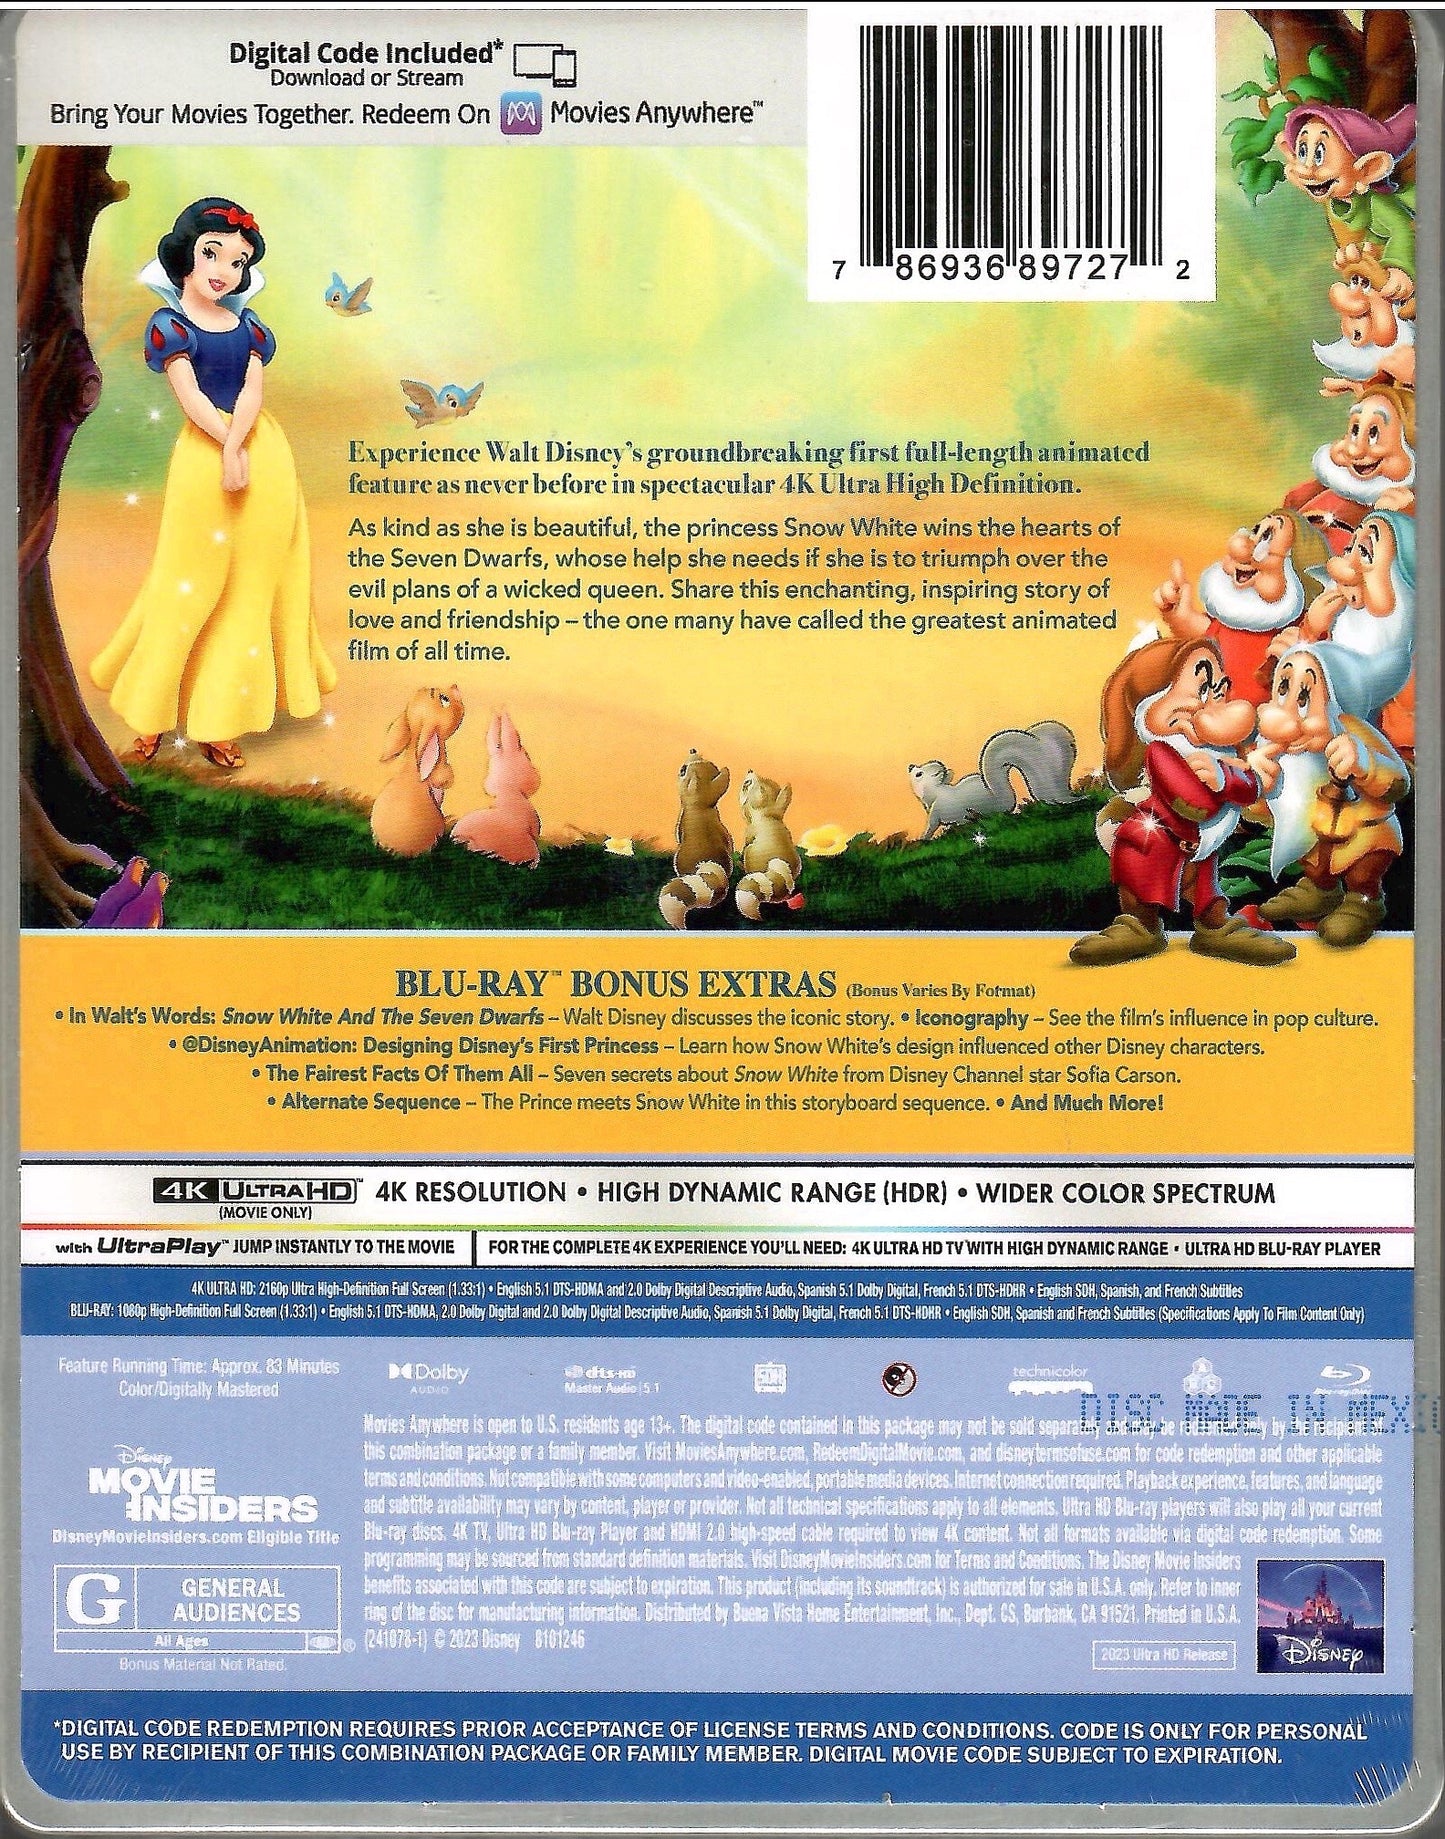 Snow White and the Seven Dwarfs 4K SteelBook - Disney 100th Anniversary Edition (Exclusive)